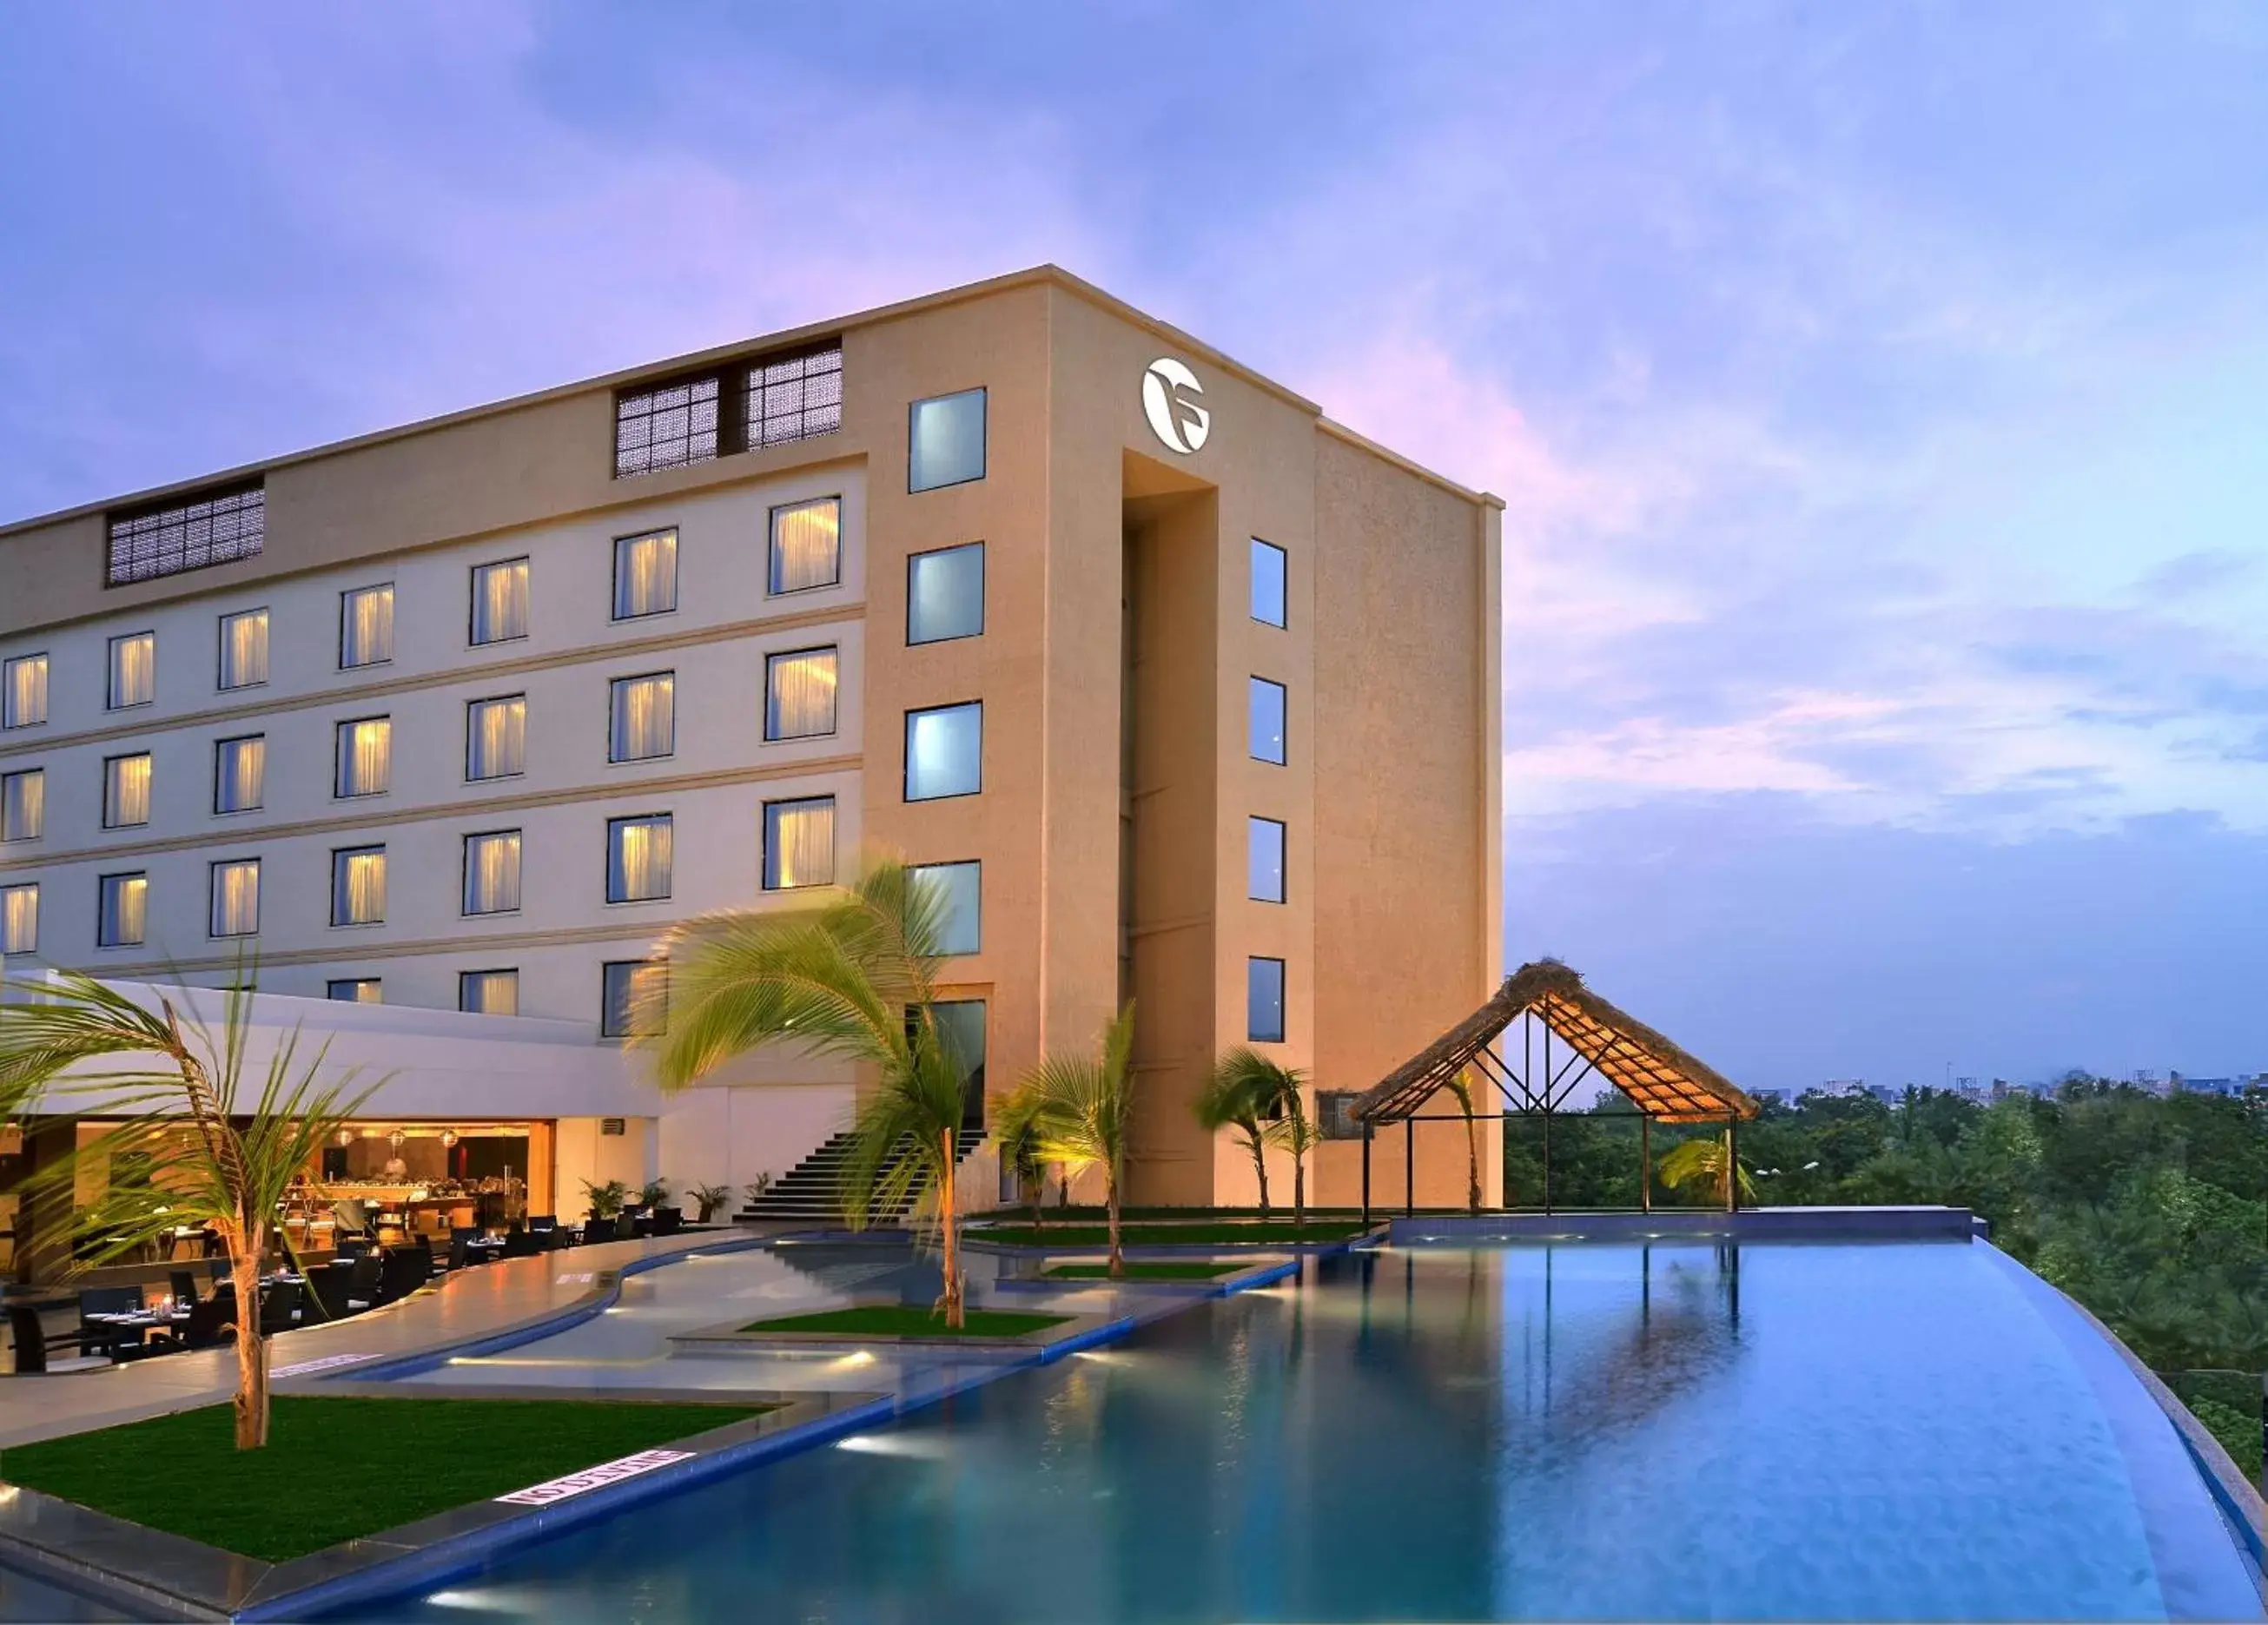 Facade/entrance in Fortune Select Grand Ridge, Tirupati - Member ITC's Hotel Group